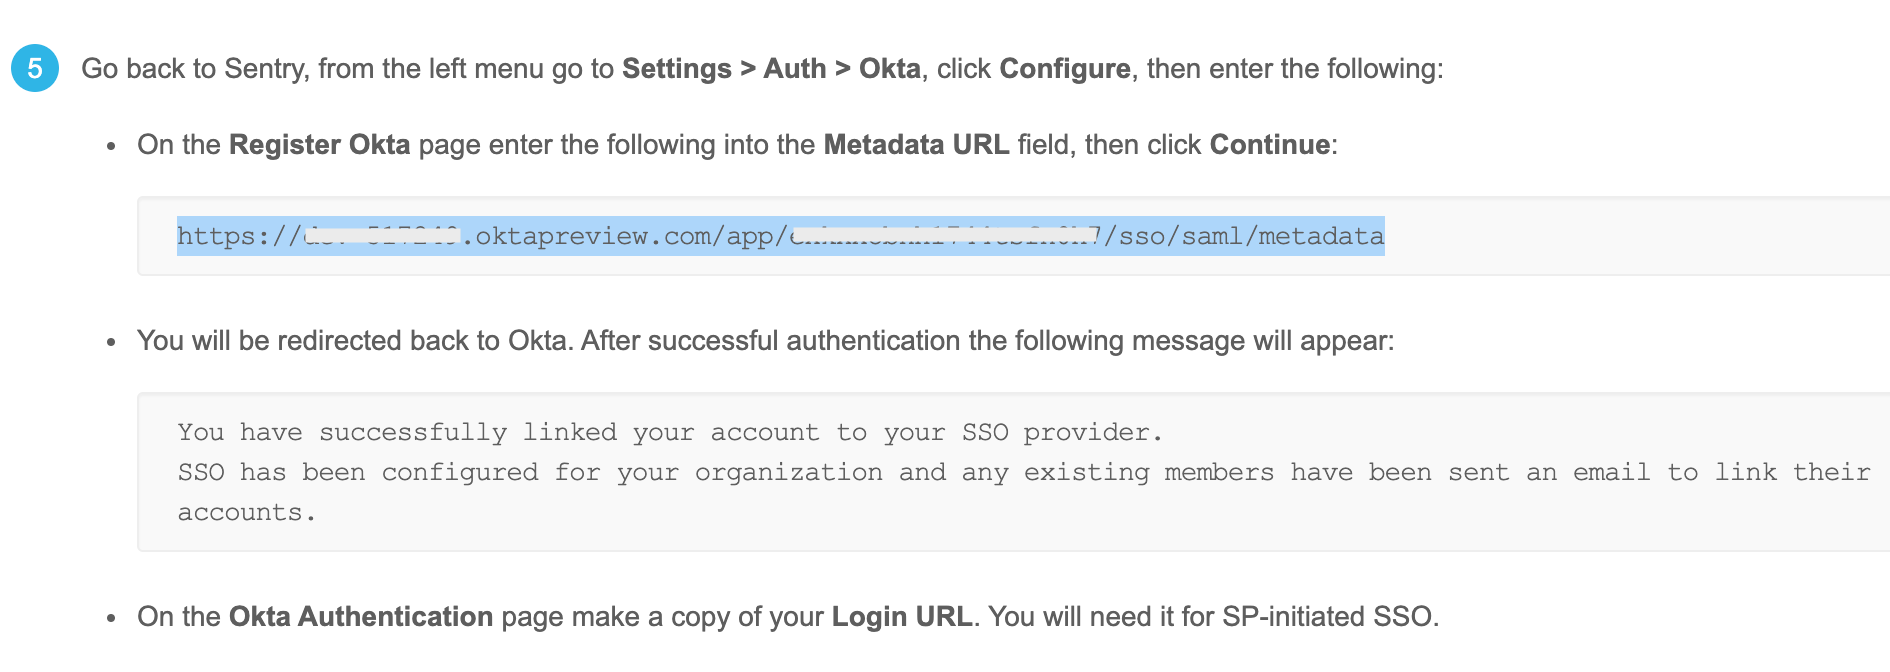 Okta metadata URL in setup instructions